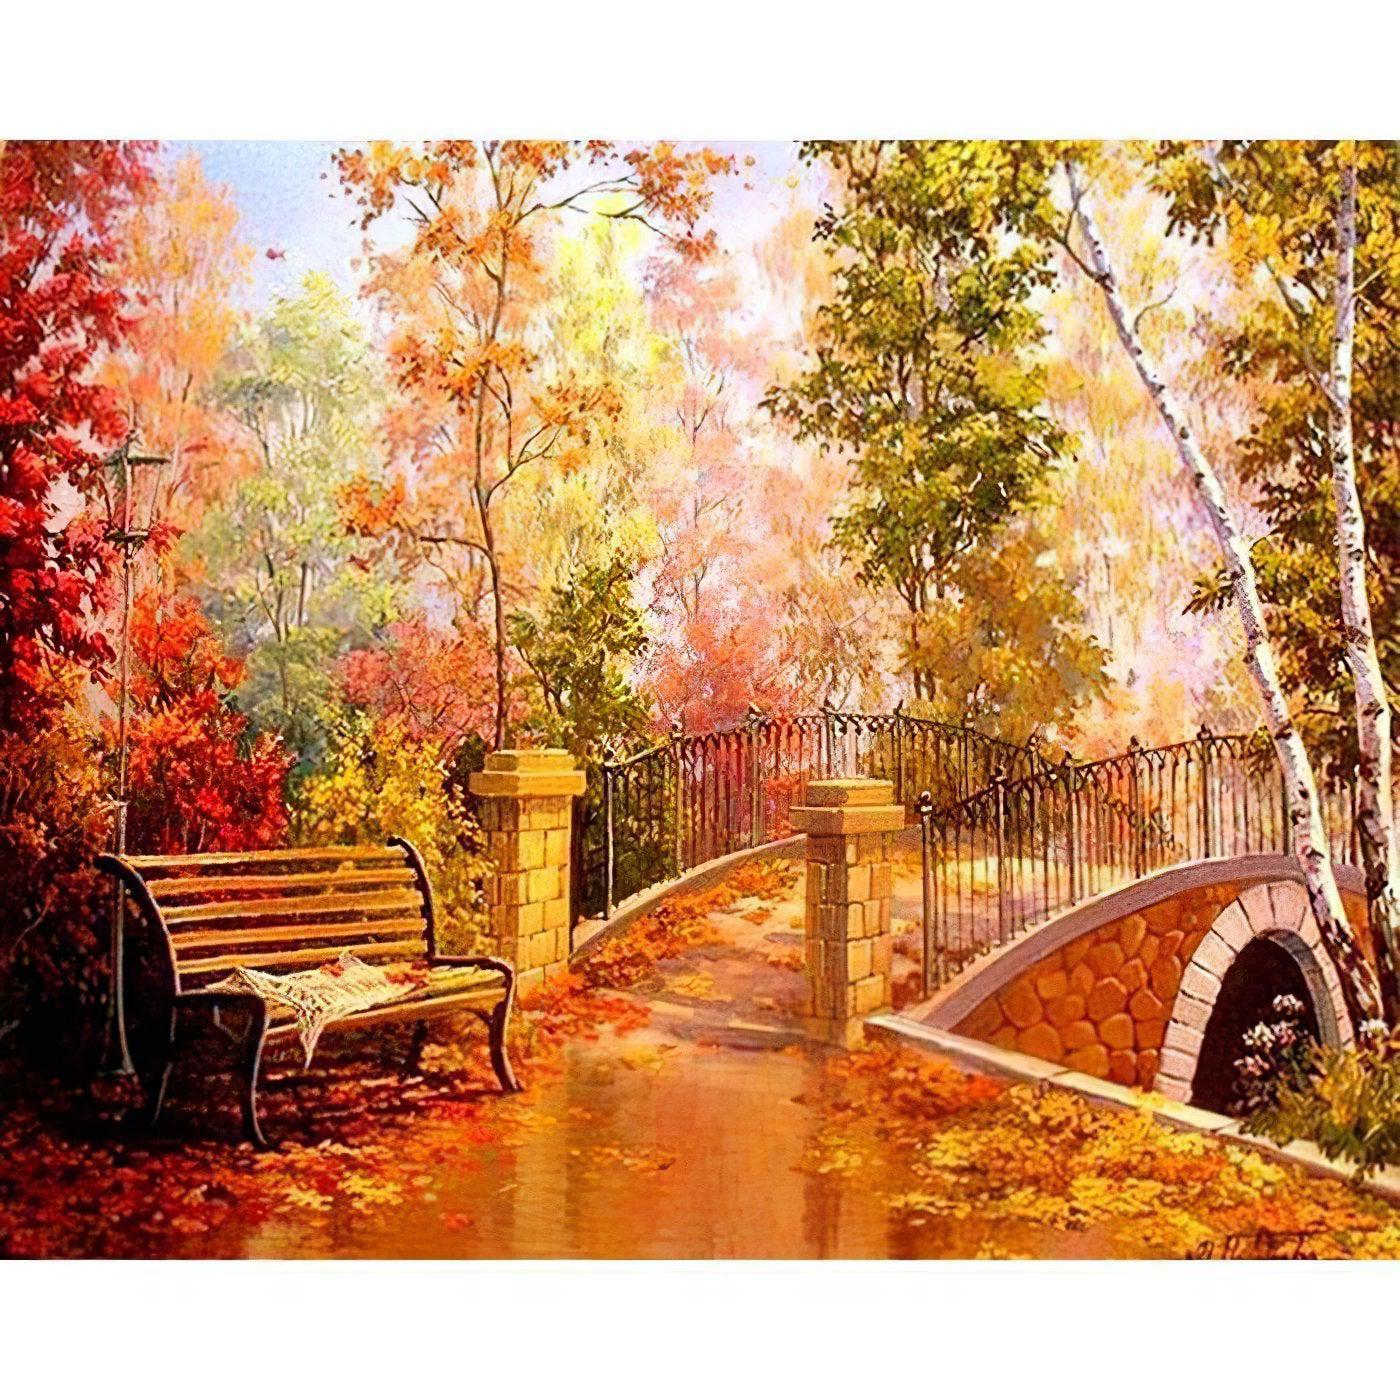 Autumn With Fallen Leaves: A crisp, colorful carpet of nature's bounty Autumn With Fallen Leaves - Diamondartlove